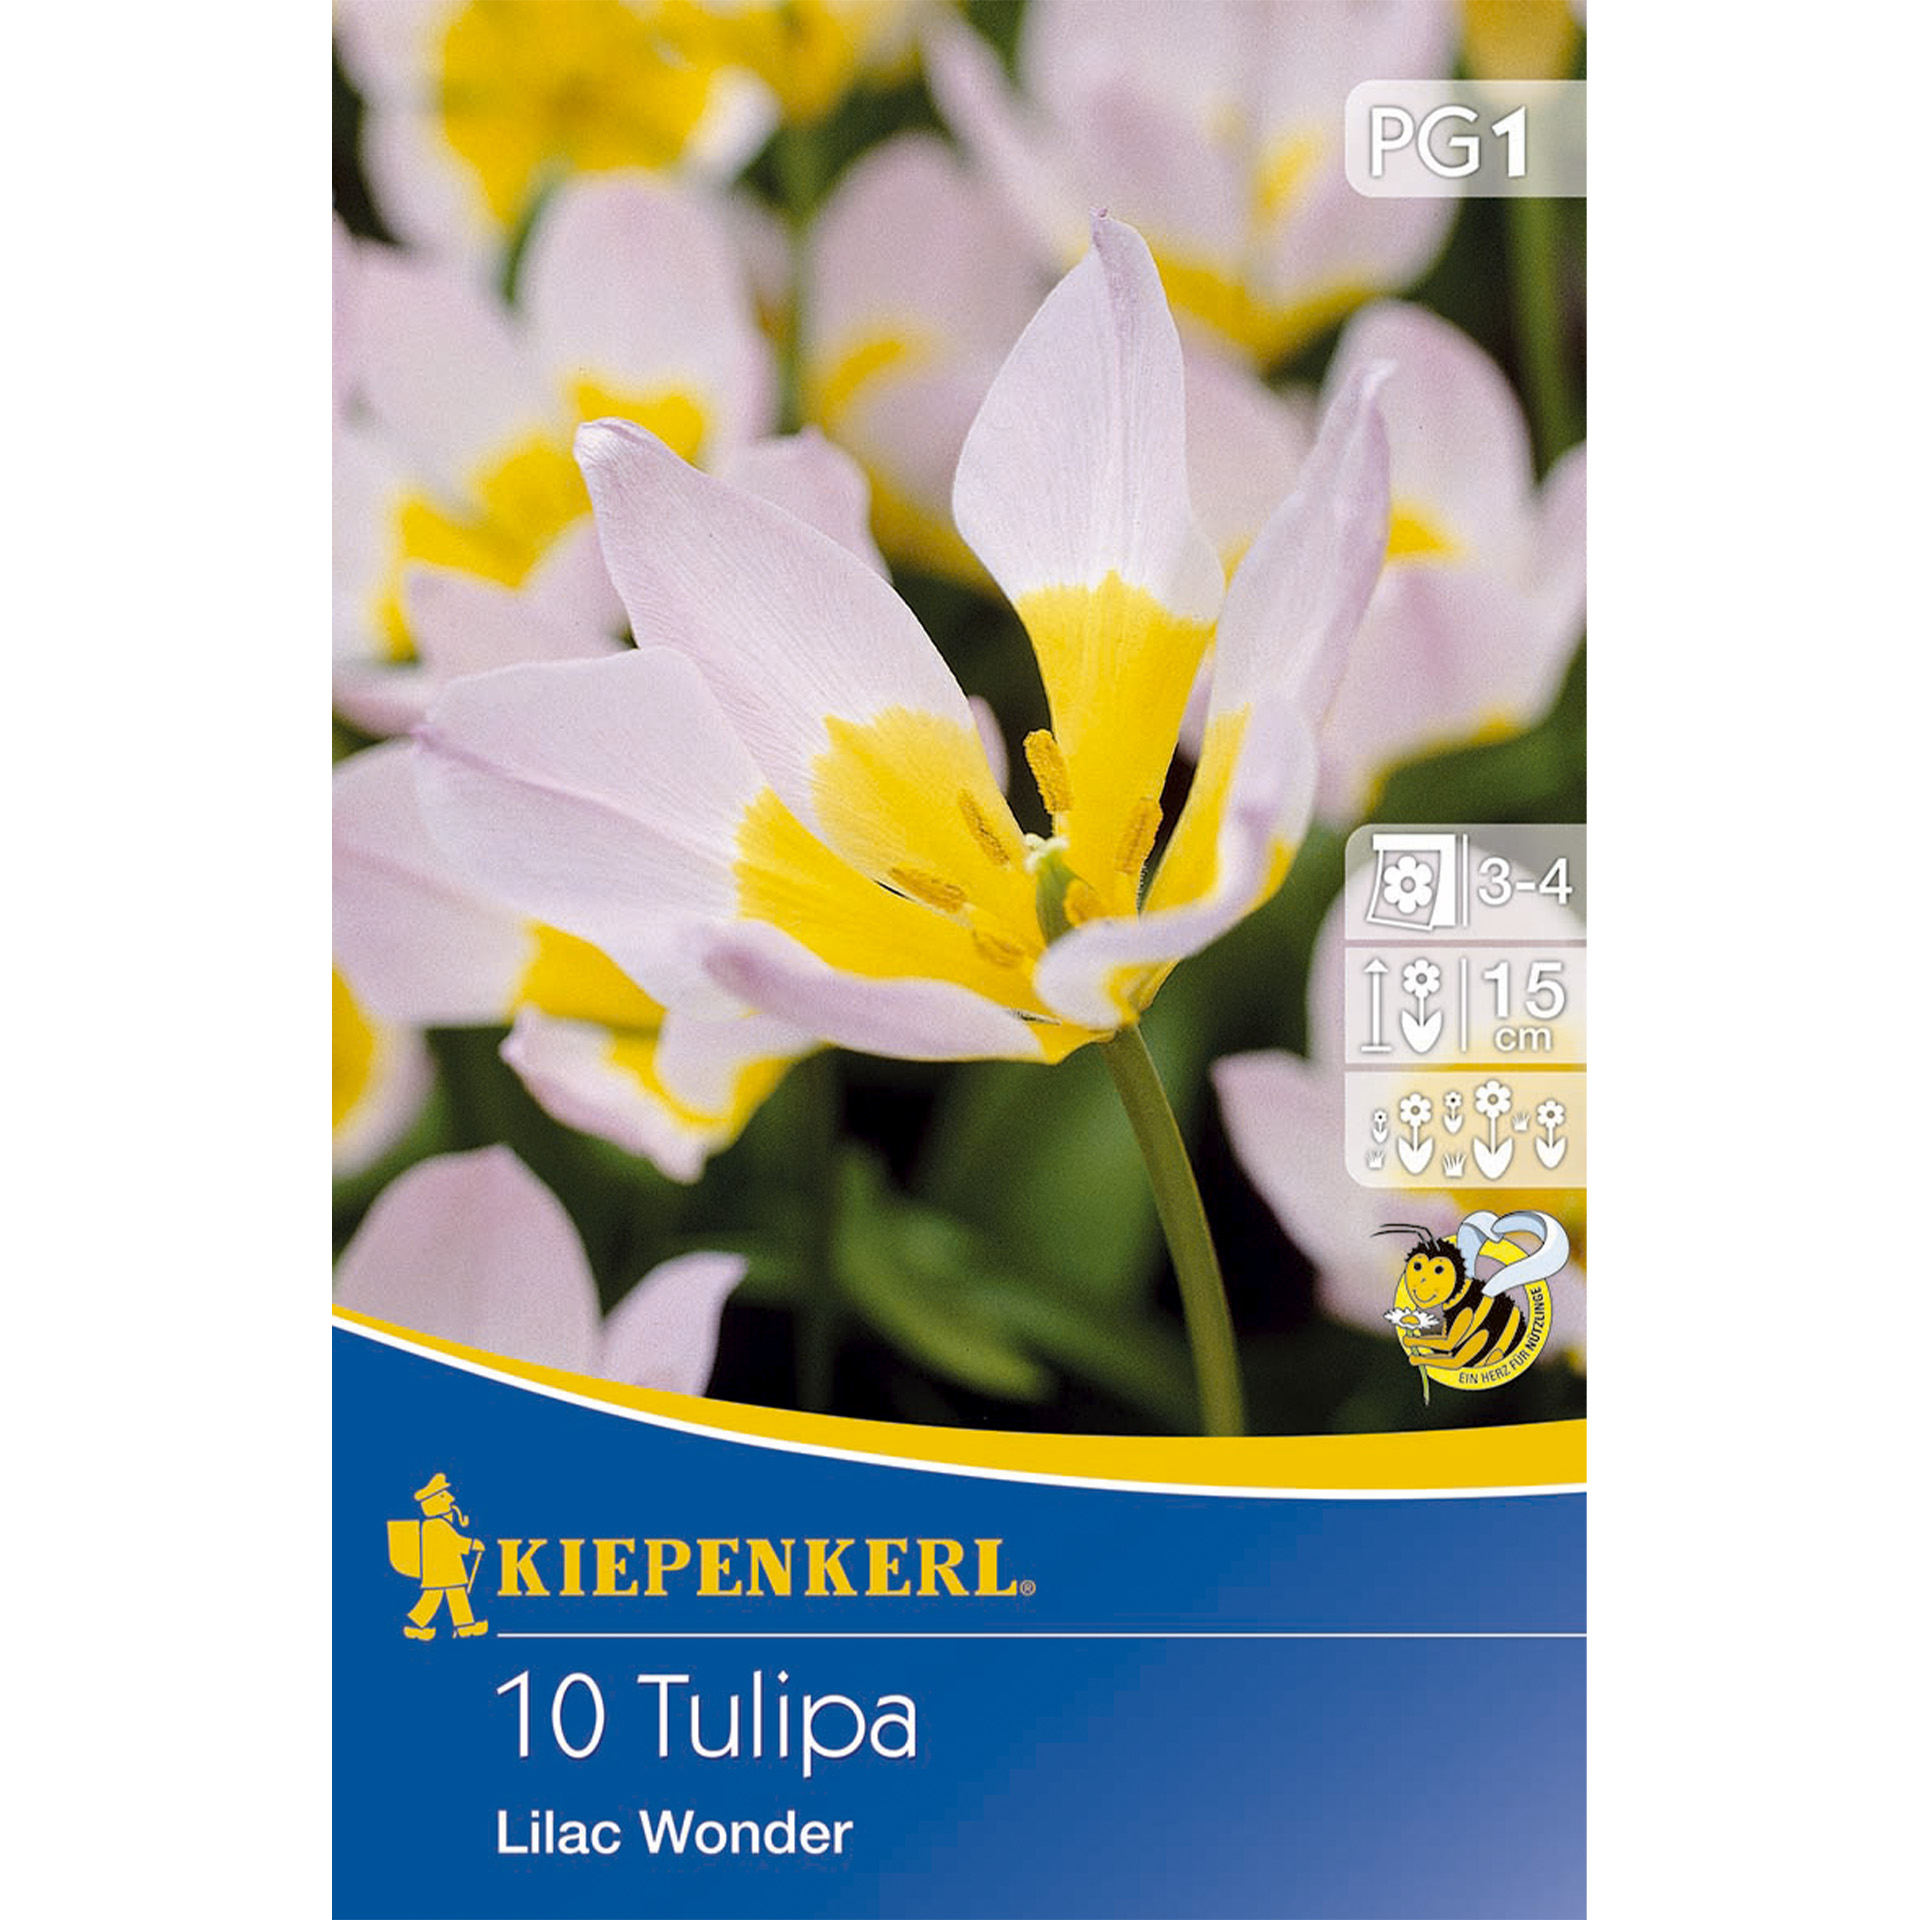 Tulpe im rosa-lila-Ton, Blütenblätter mit spezieller schmaler Form